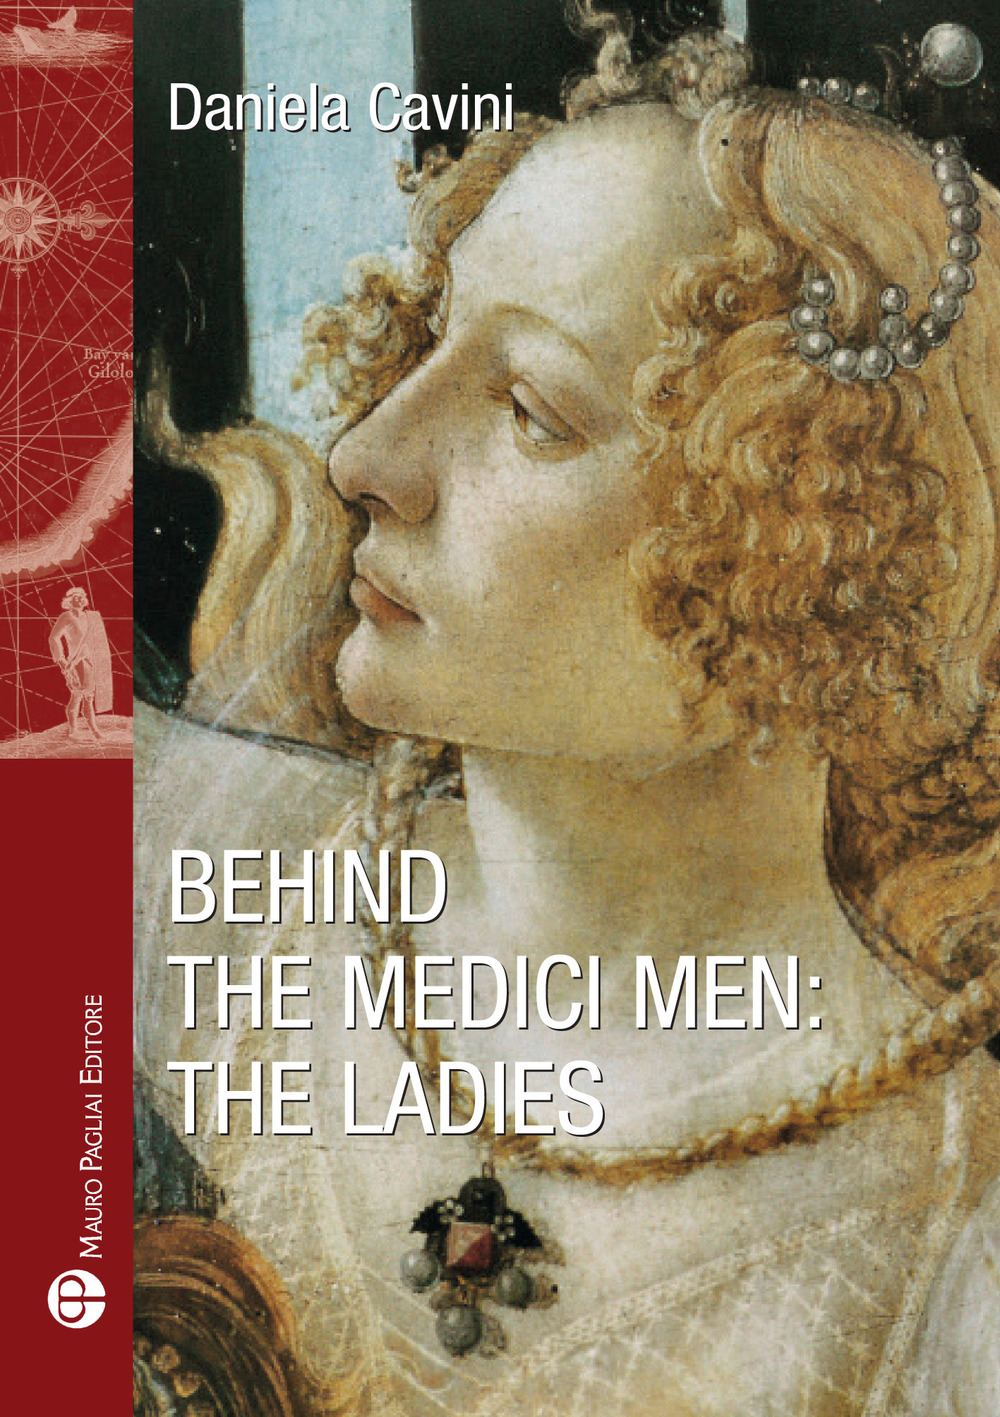 Behind the medici men. The ladies